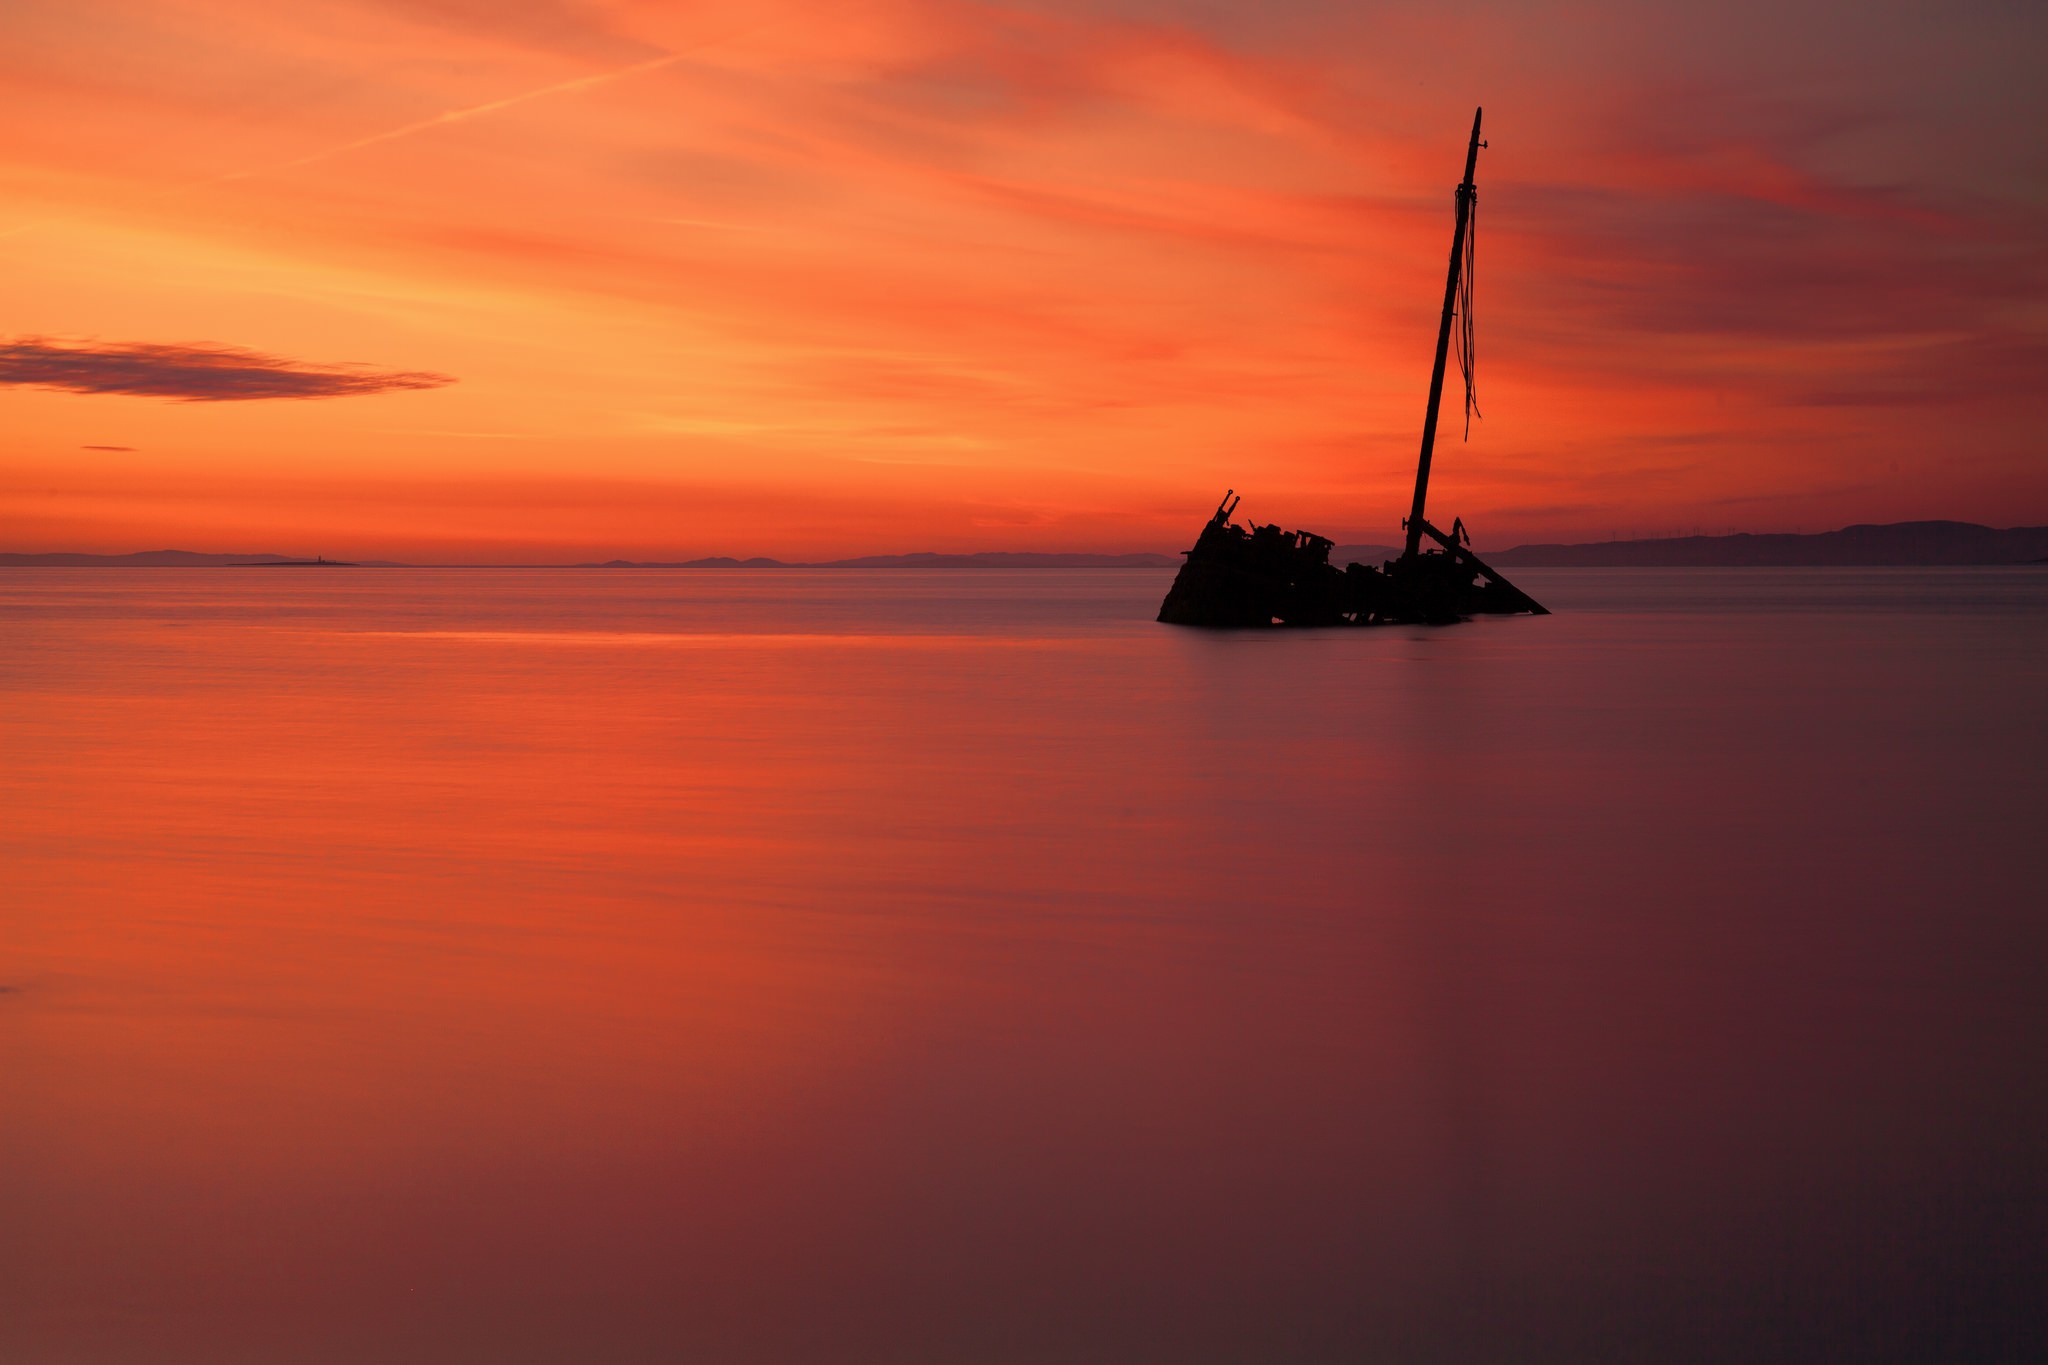 General 2048x1365 wreck sunset orange sky landscape shipwreck coast sea dusk silhouette